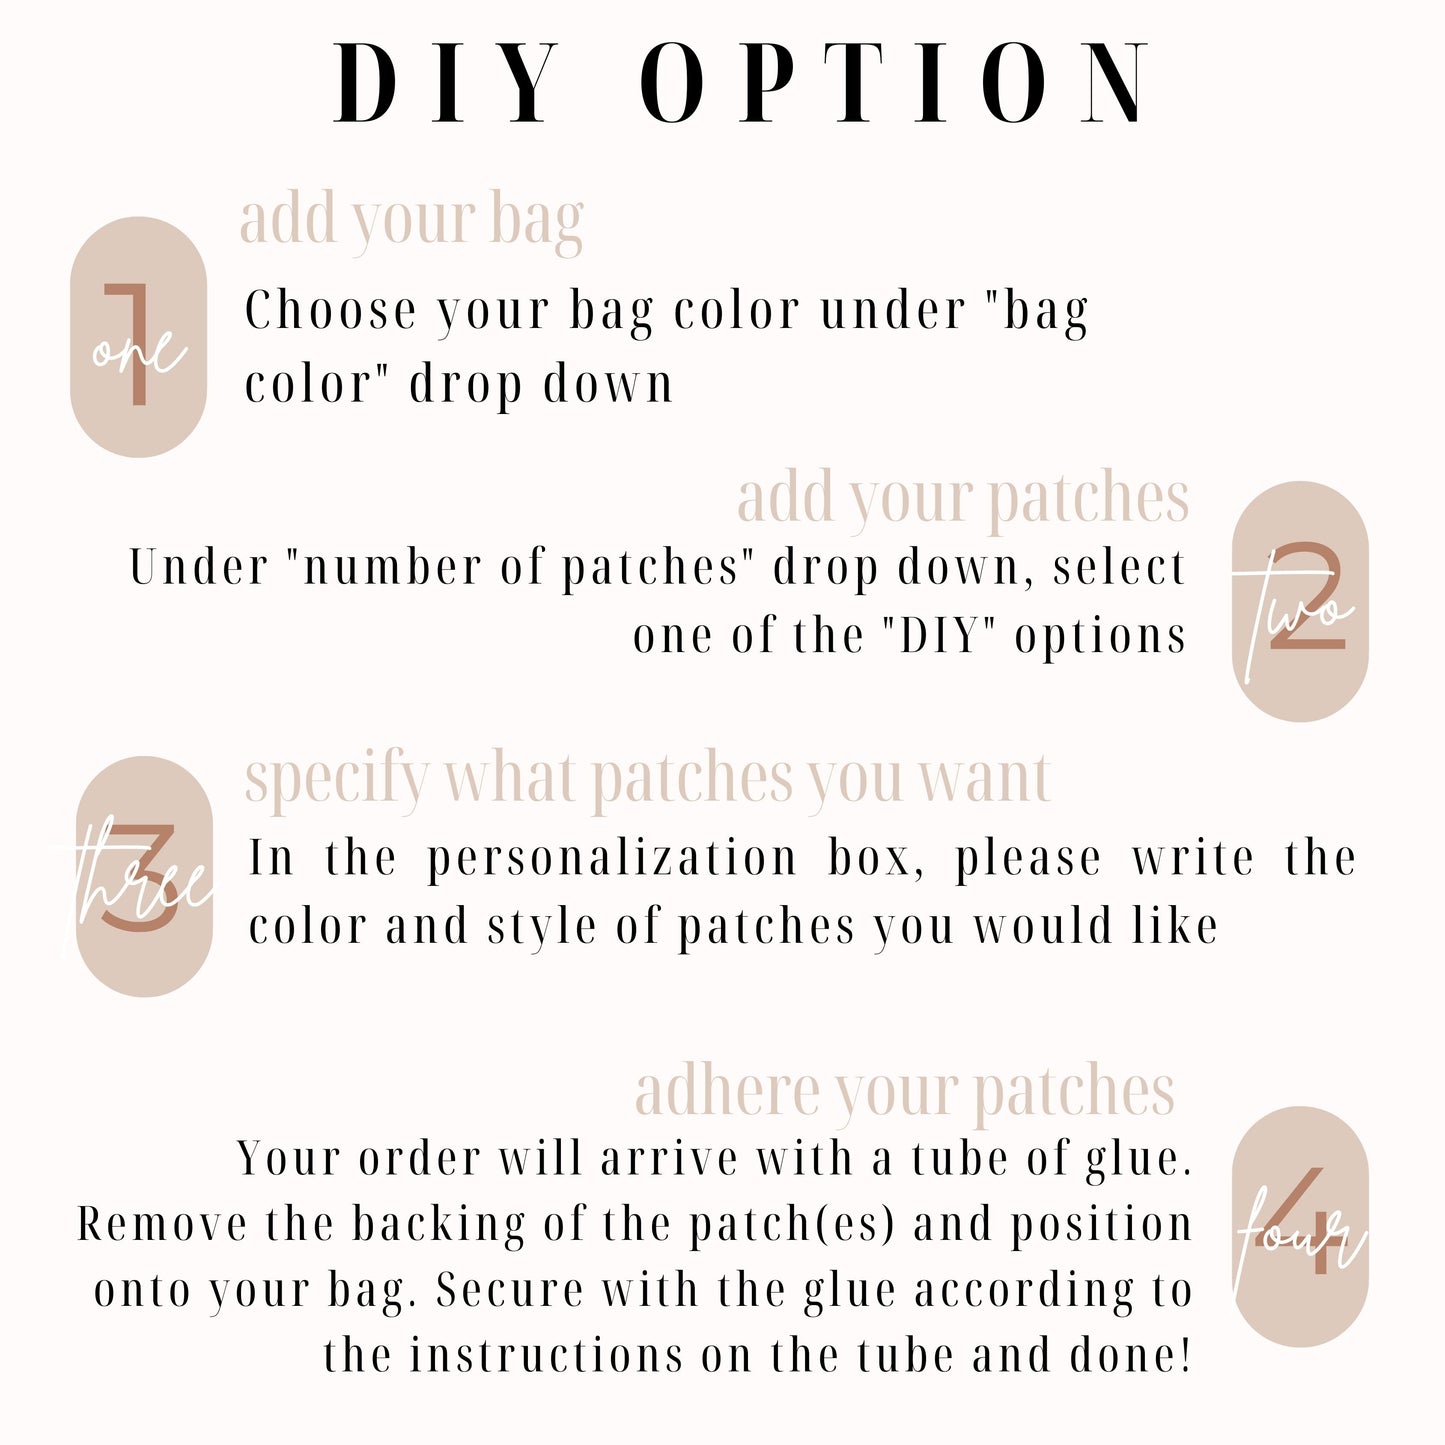 DIY Nylon Duffle Bag